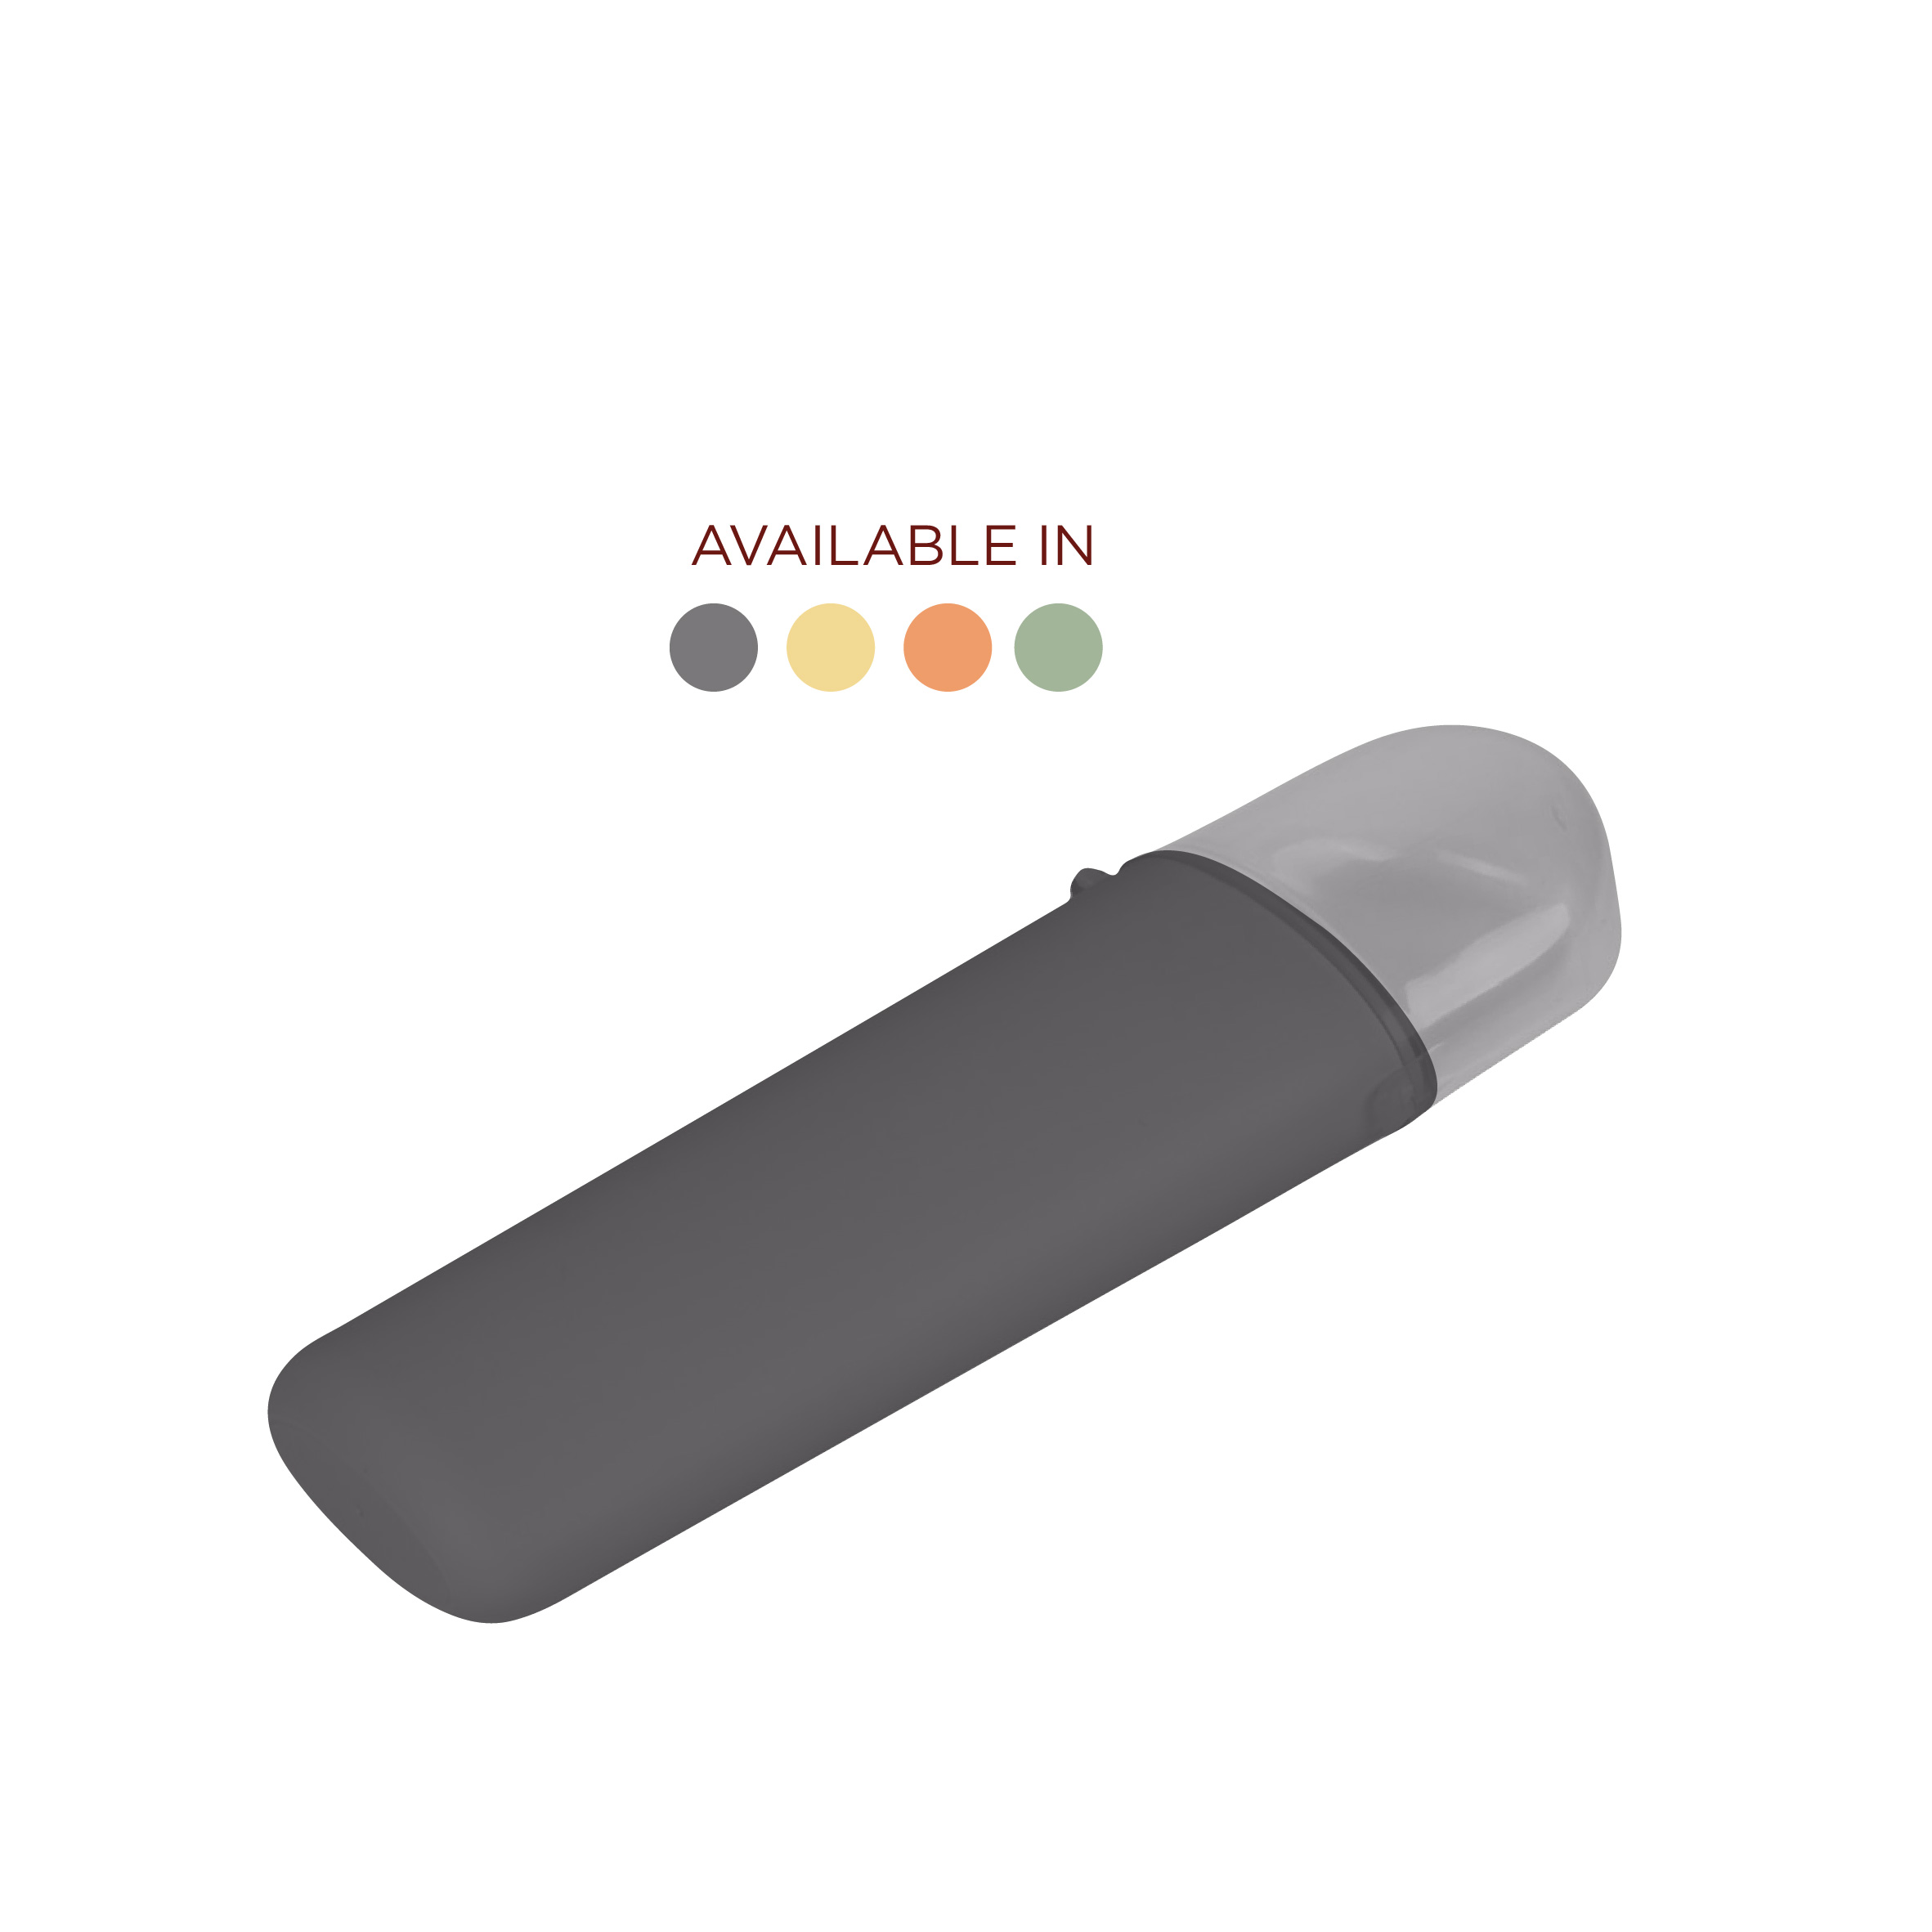 Sunplast Multipurpose Box (Available in Grey / Yellow / Orange / Green), SB-2703